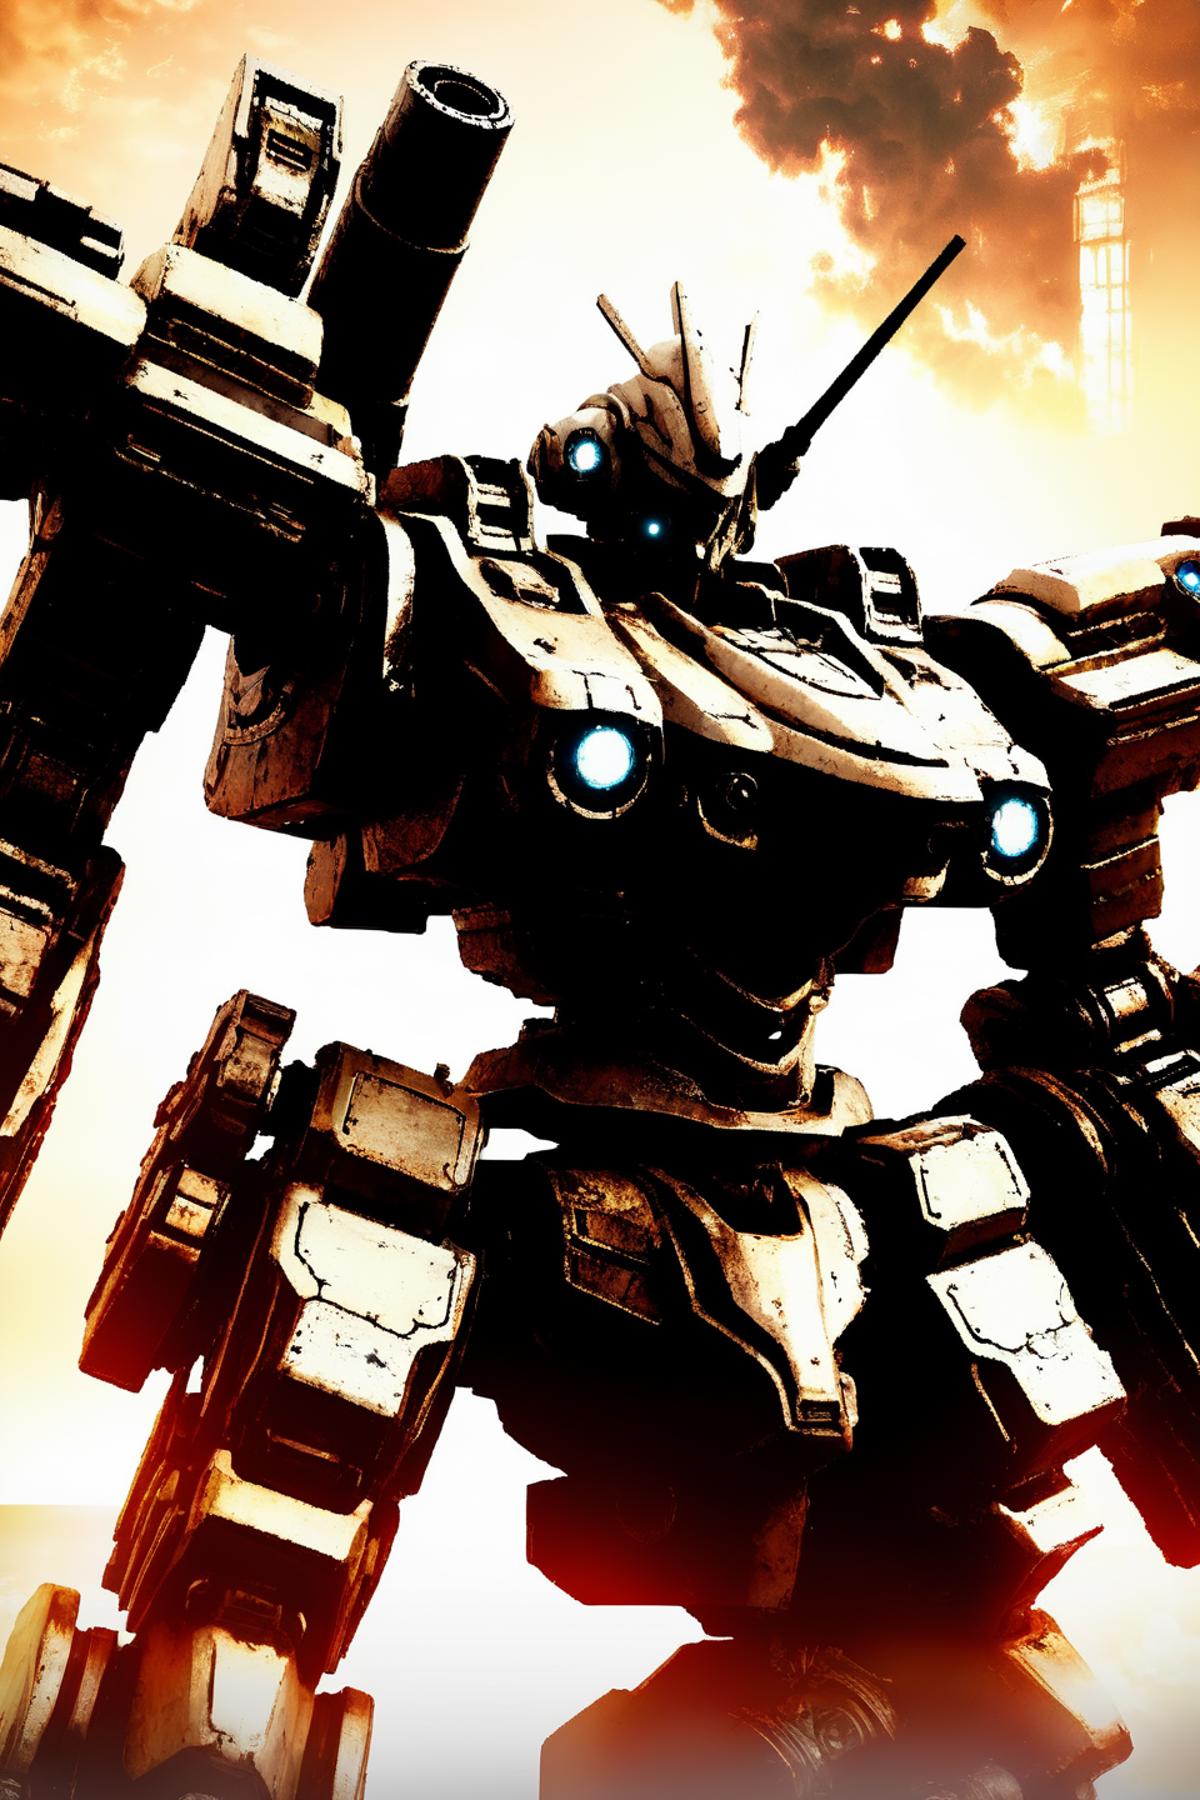 Super robot diffusion XL (Gundam, EVA, ARMORED CORE, BATTLE TECH like mecha lora) image by rei_rei